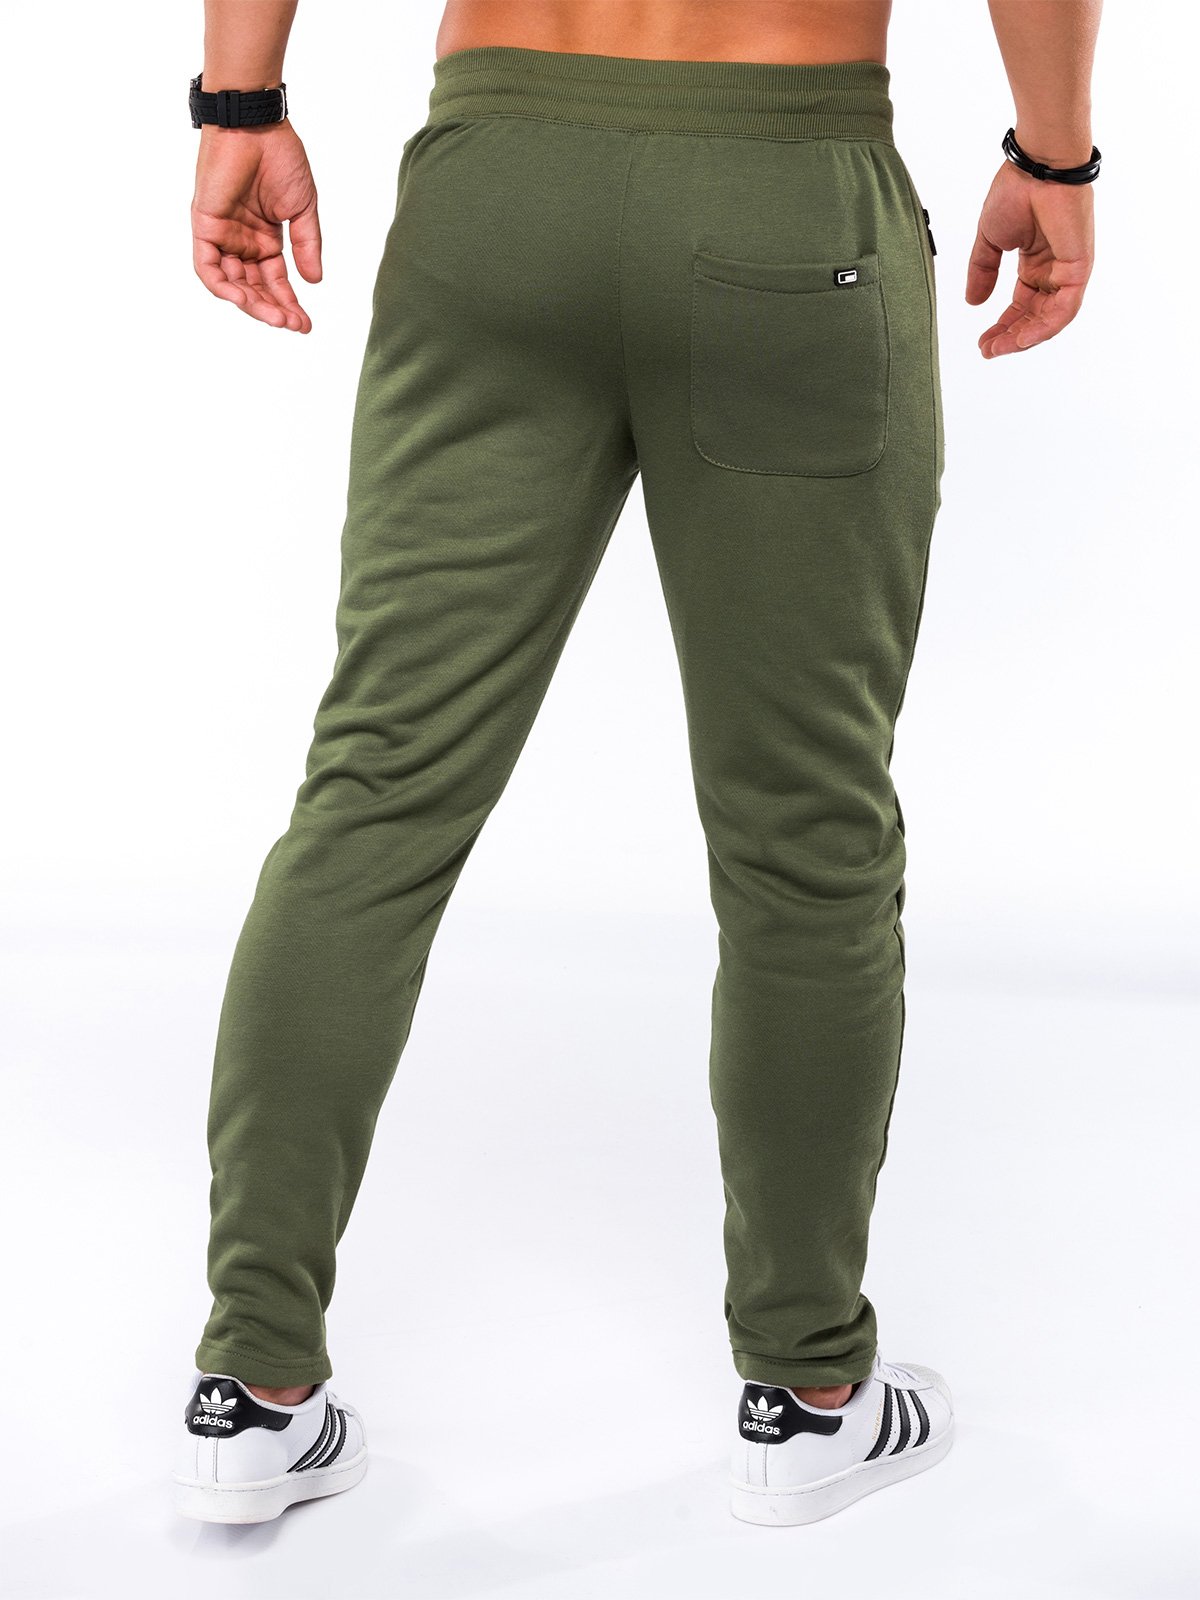 Men's sweatpants P549 - khaki | MODONE wholesale - Clothing For Men